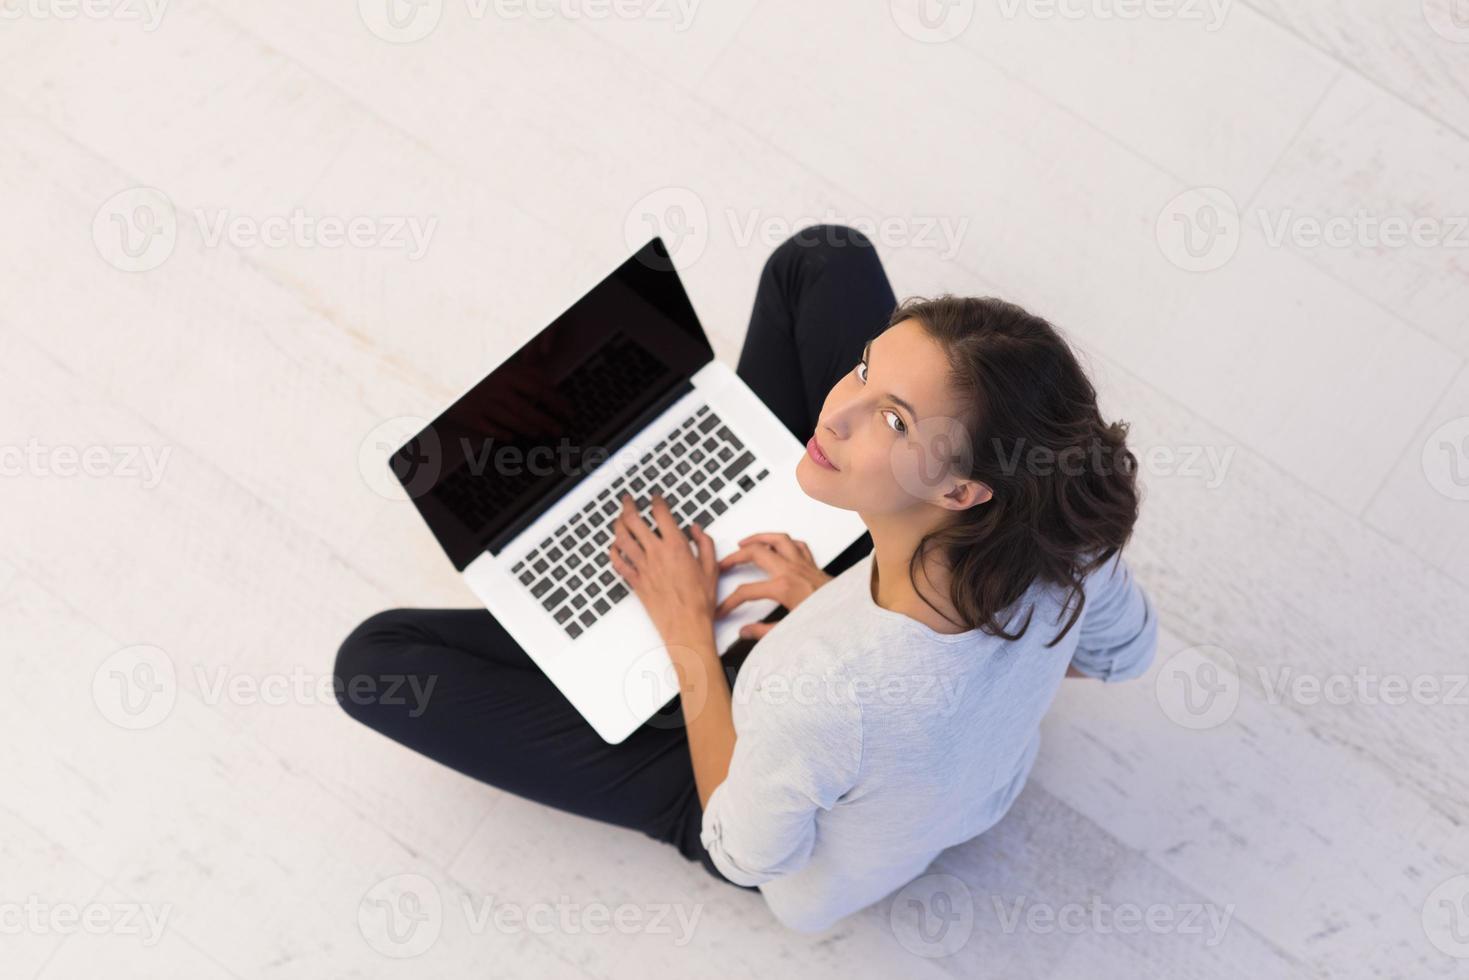 women using laptop computer on the floor top view photo